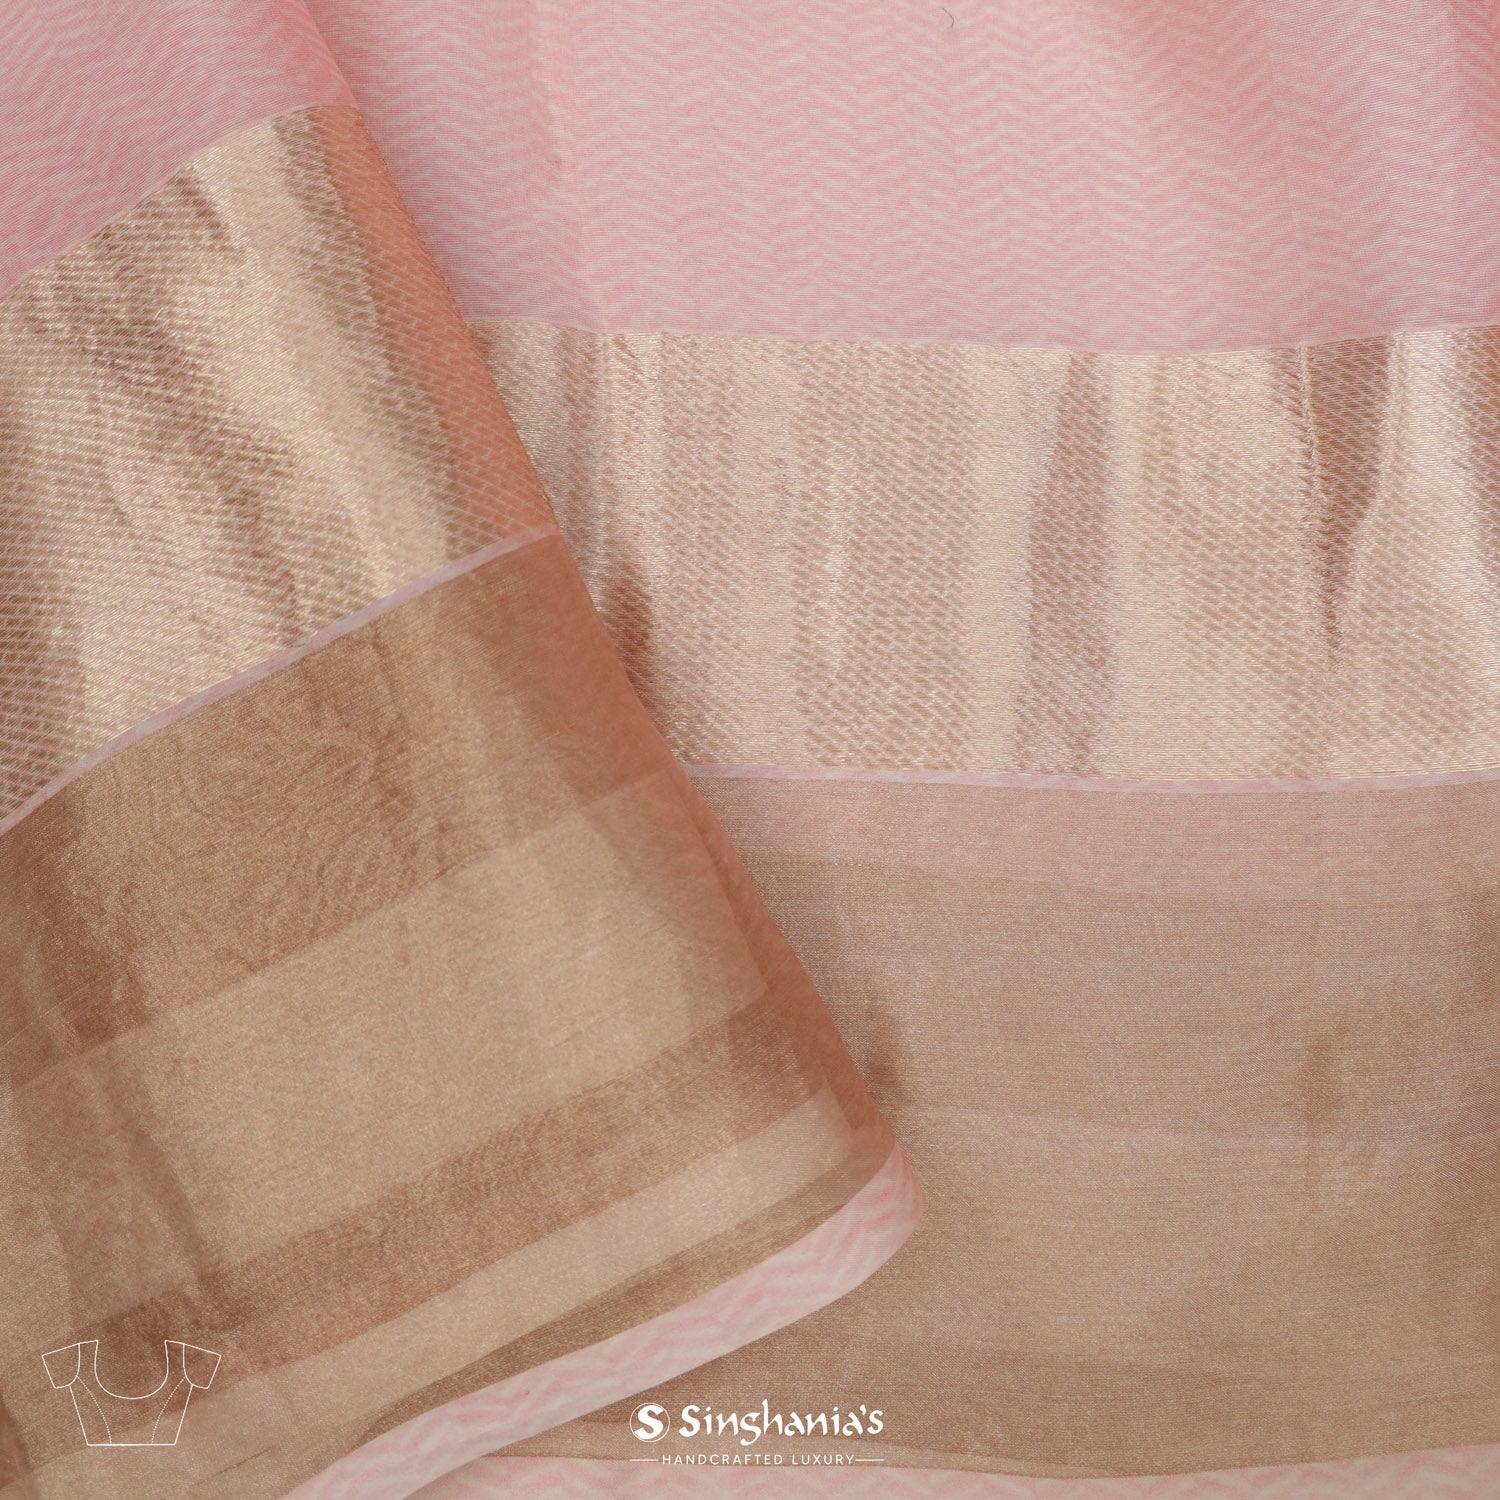 Soft Pink Printed Maheshwari Saree With Floral Pattern